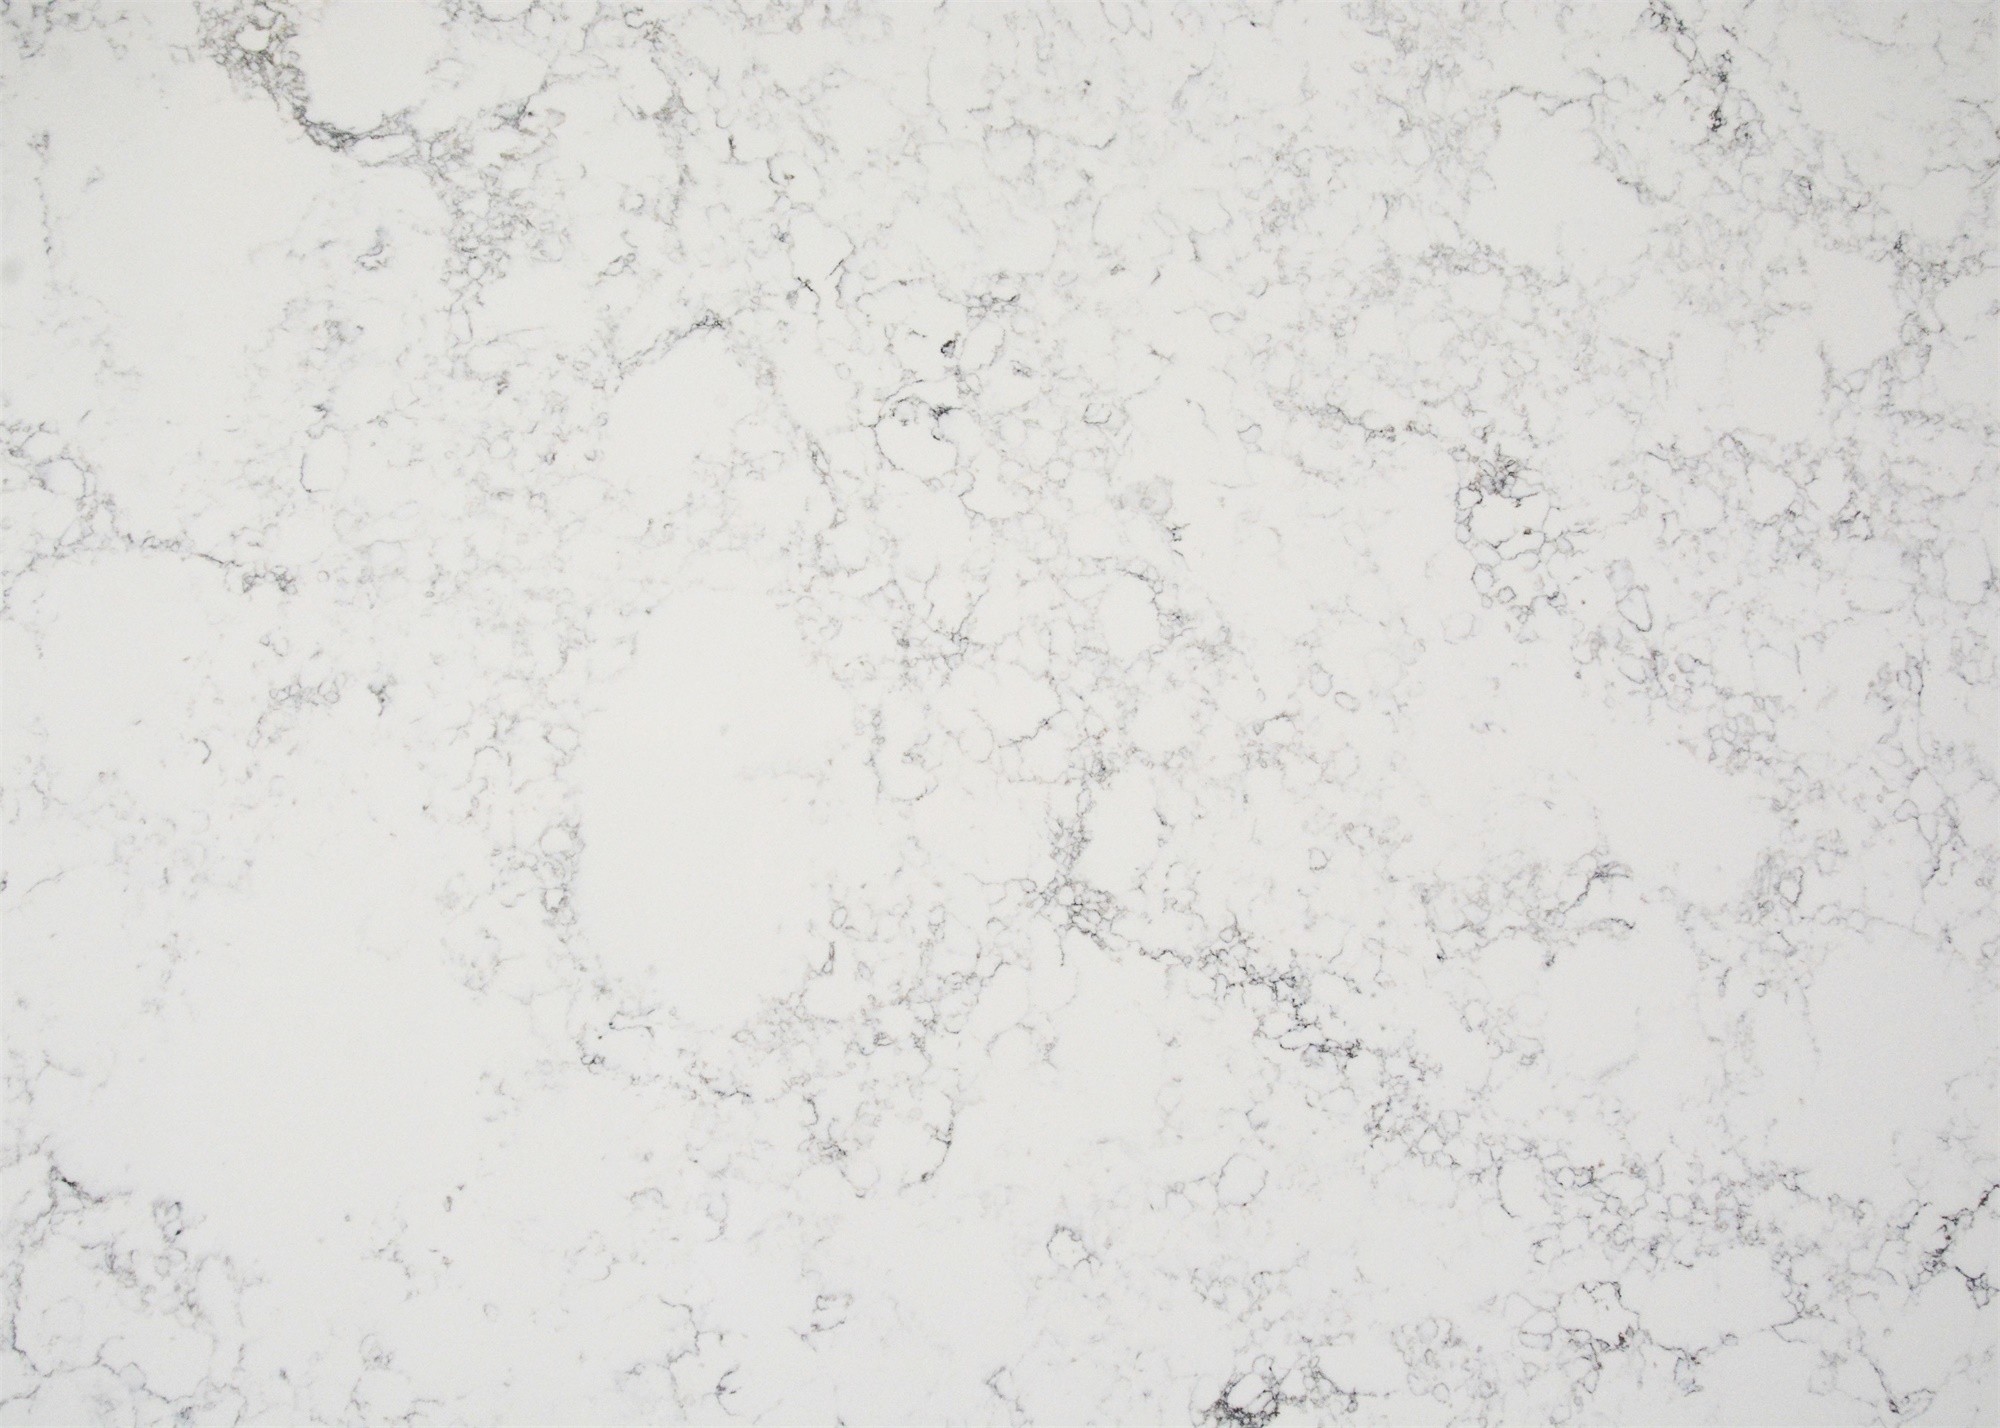 Quality Bathroom Vanitytop White Quartz Stone , Solid Color Quartz Countertops for sale